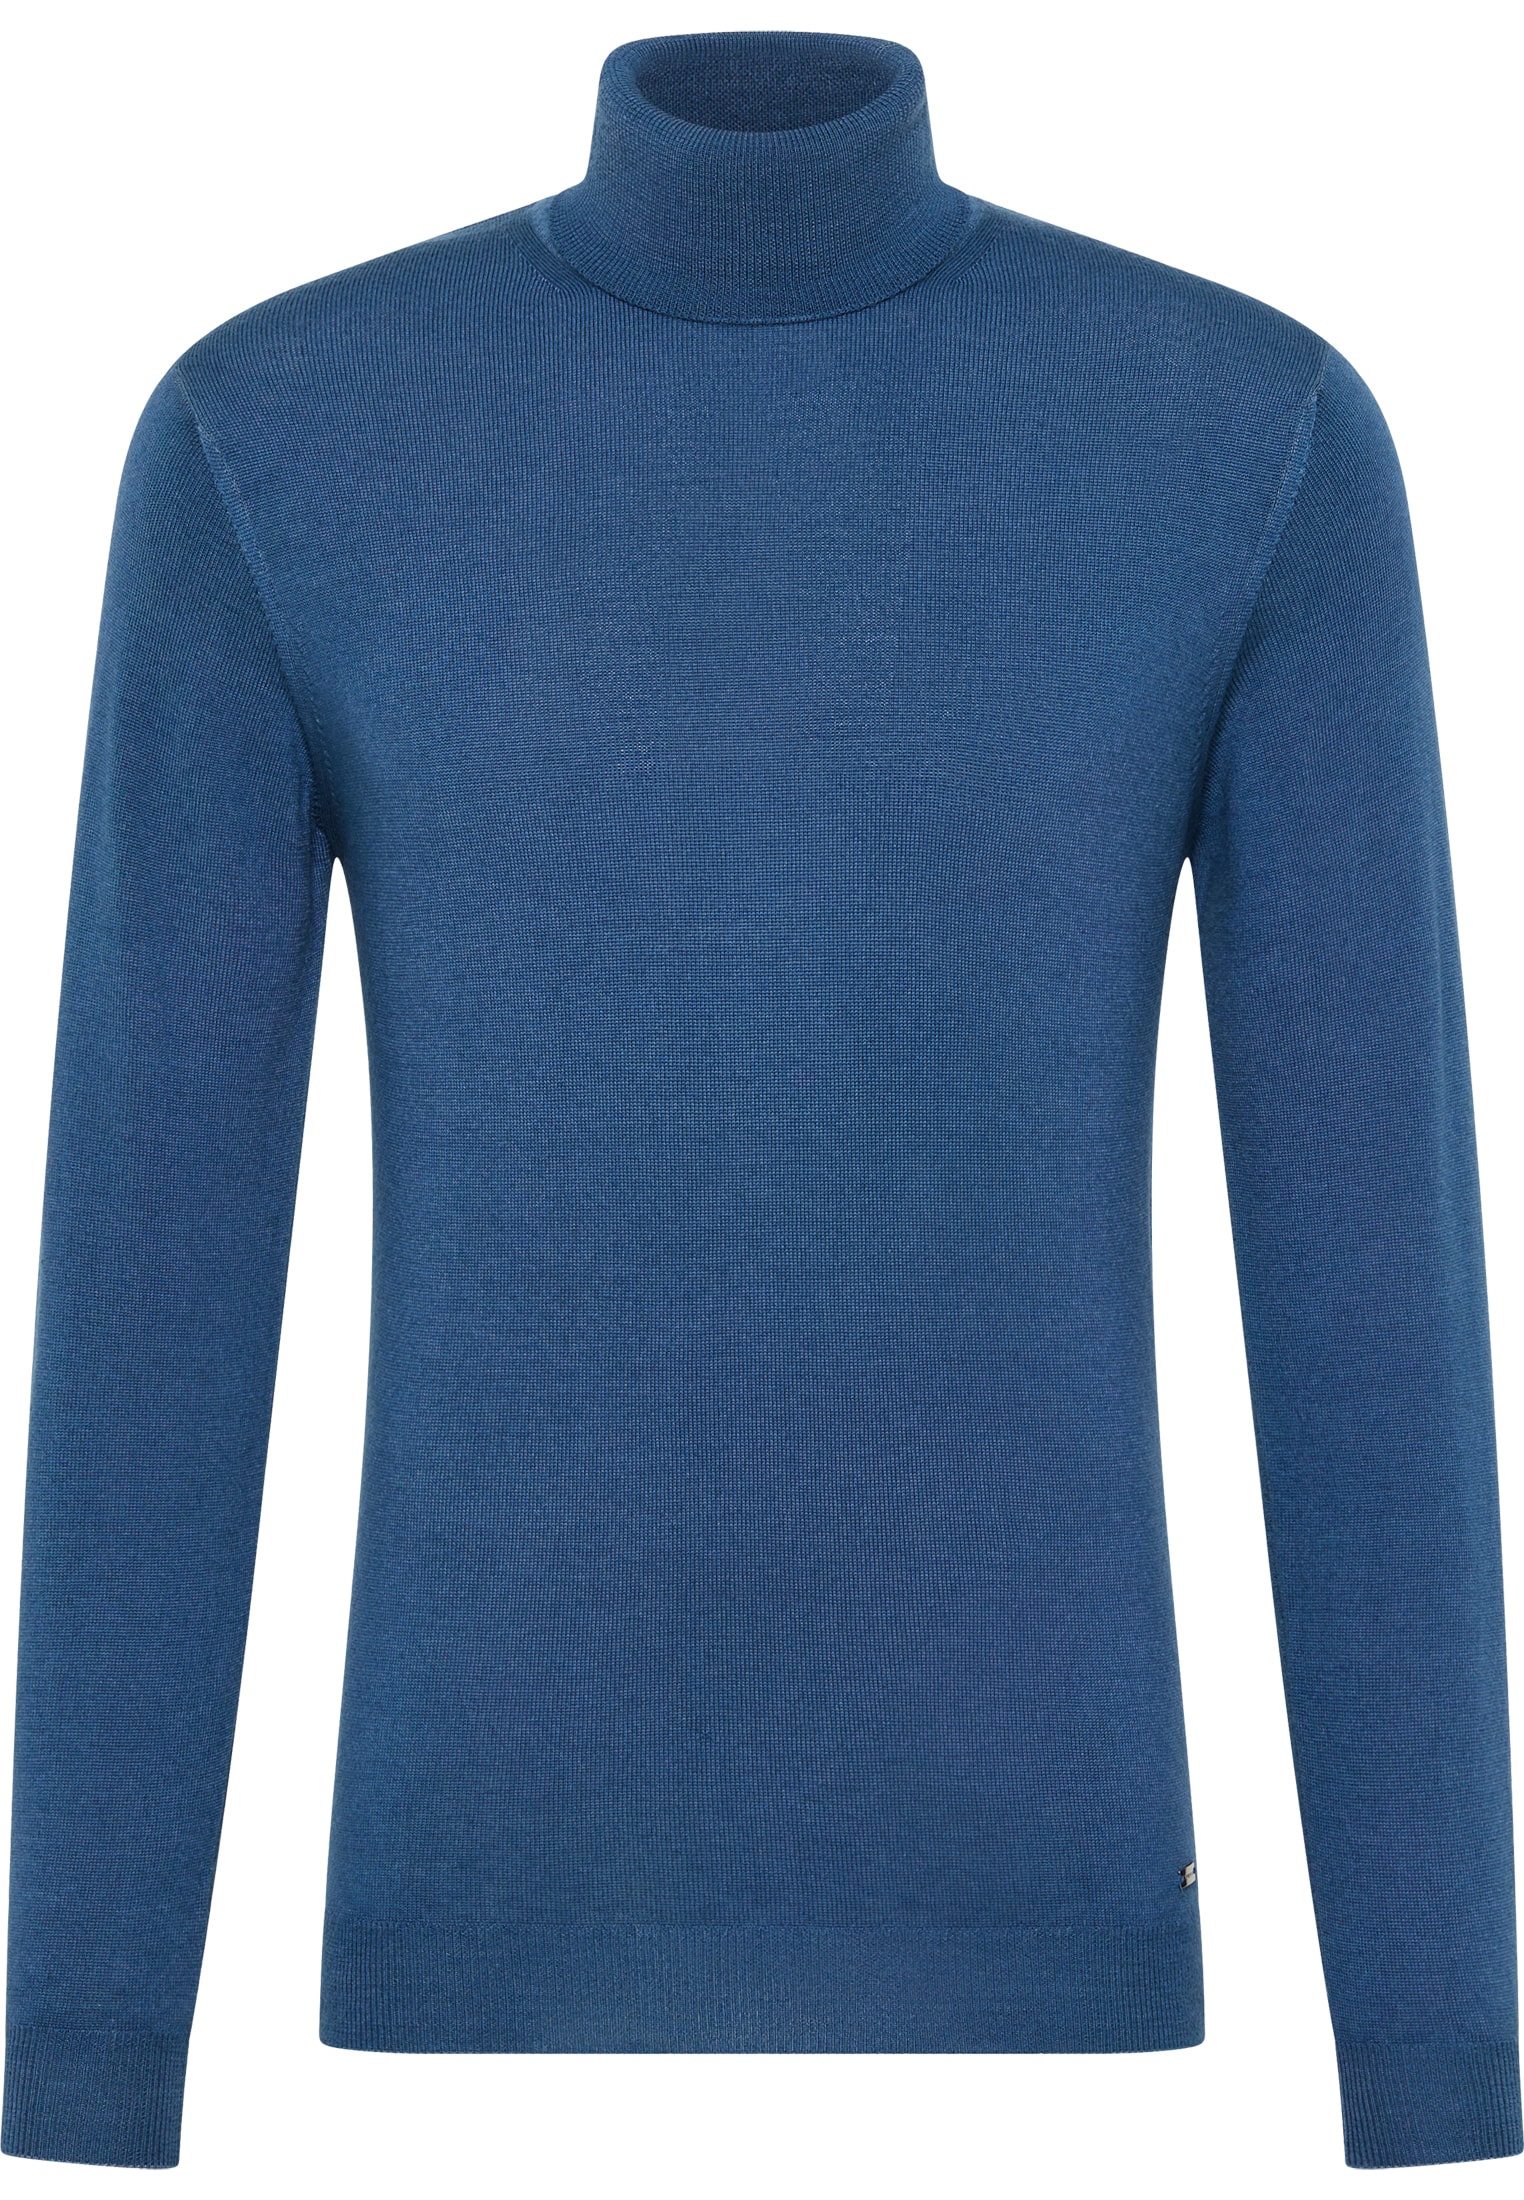 Knitted jumper in smoke blue plain